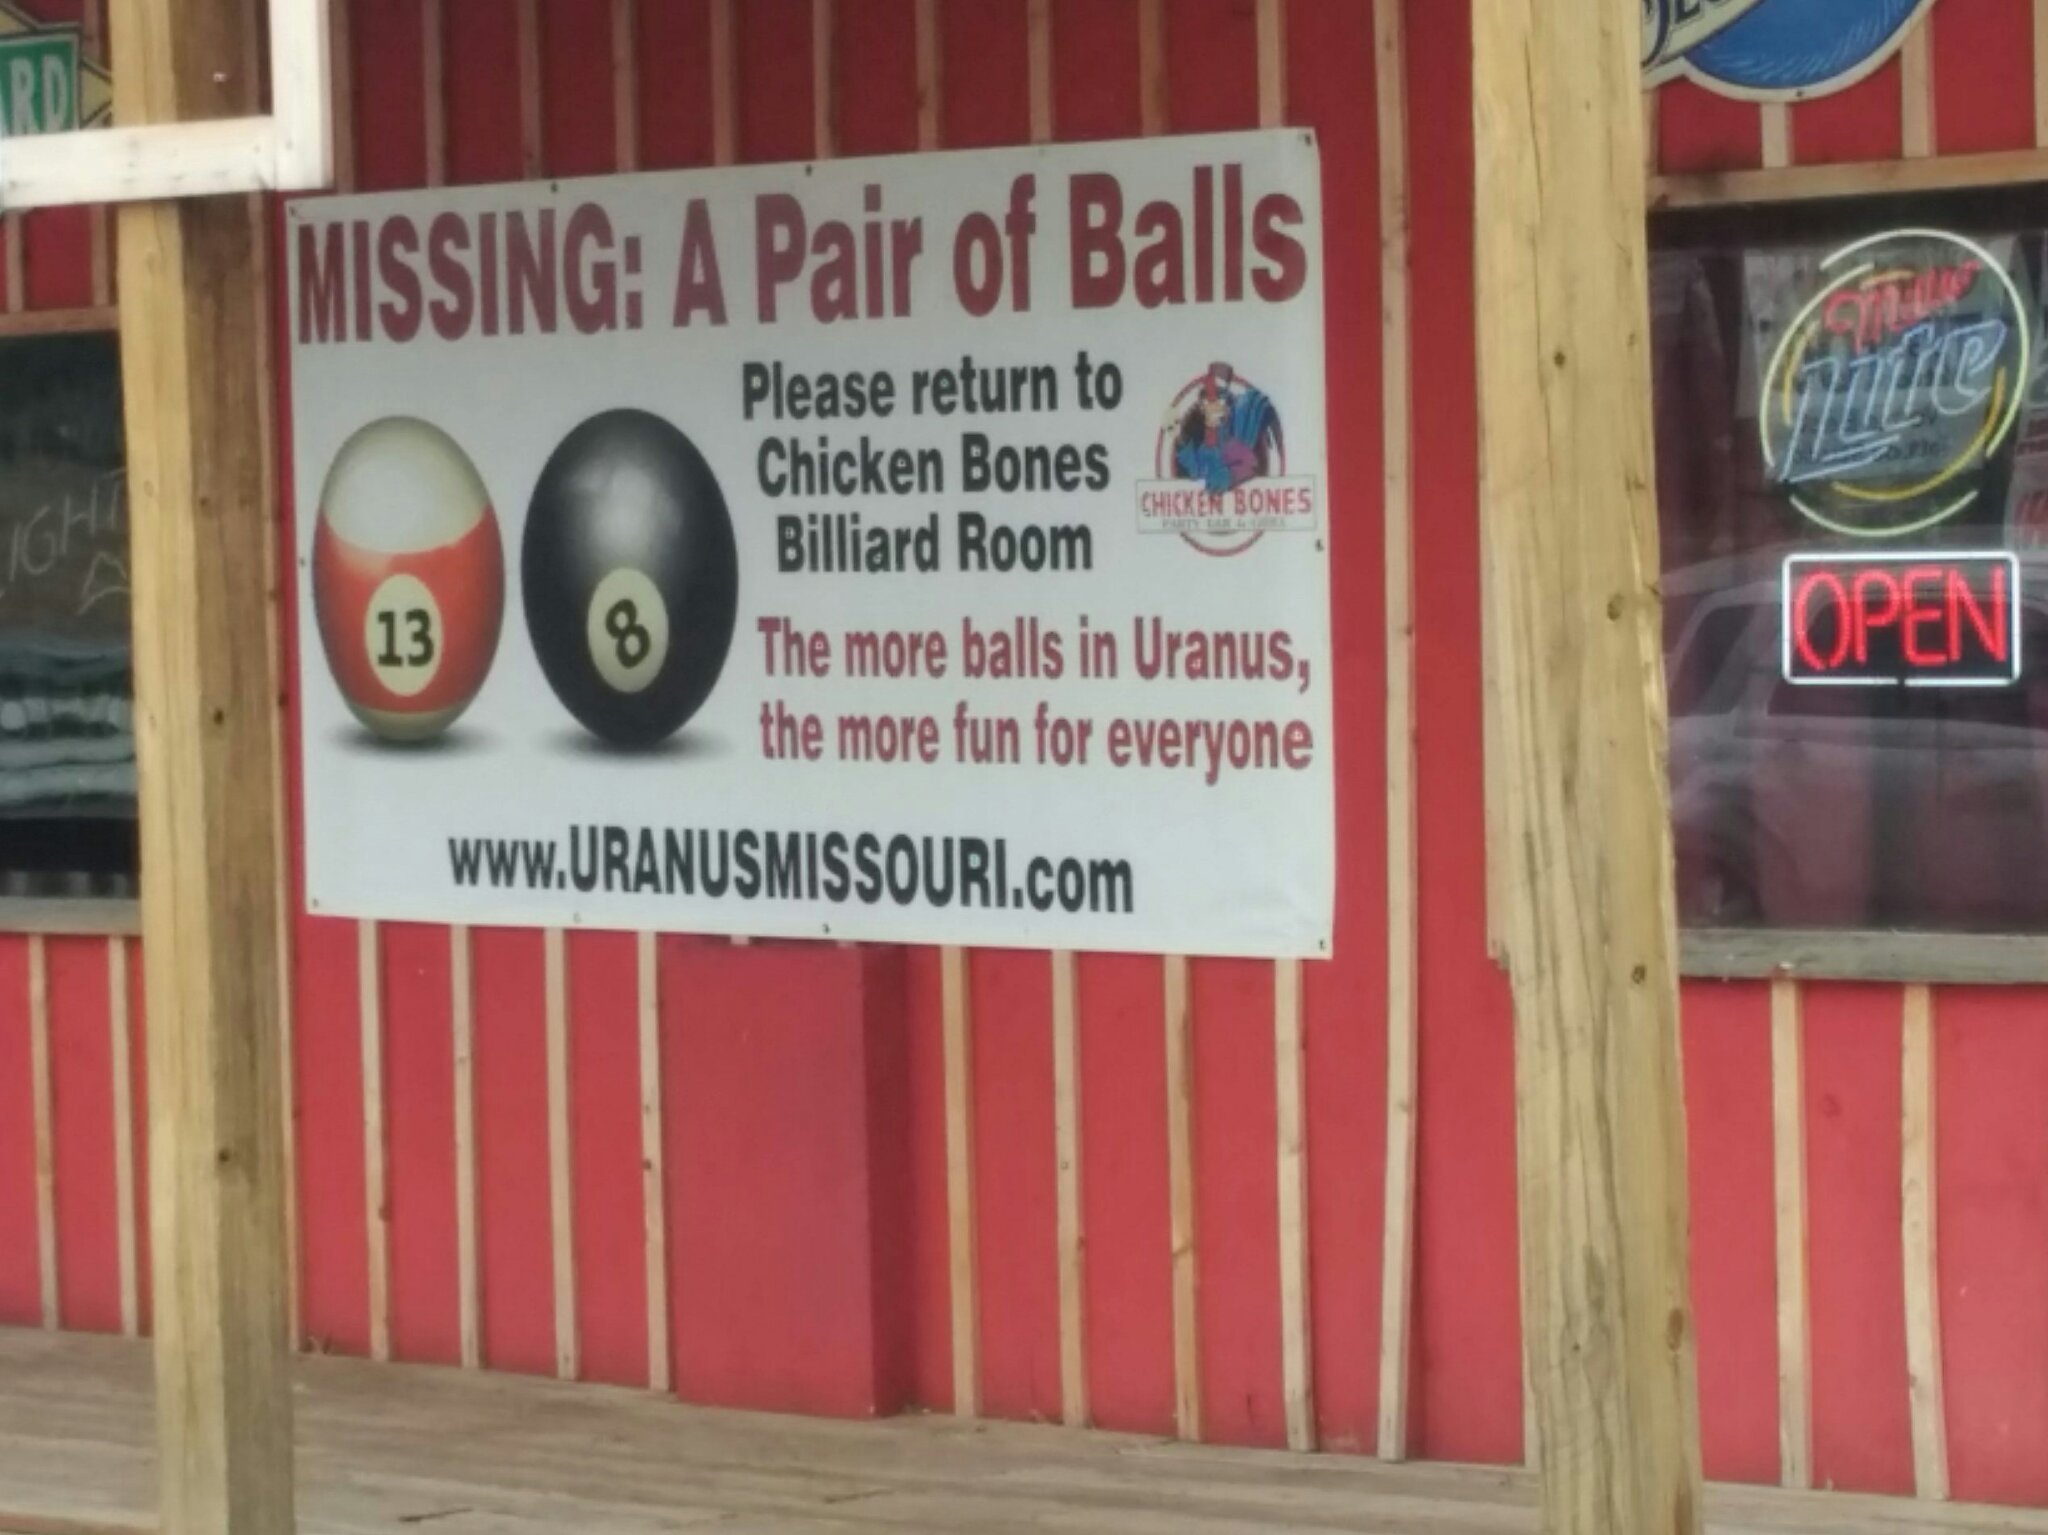 Balls and uranus - meme